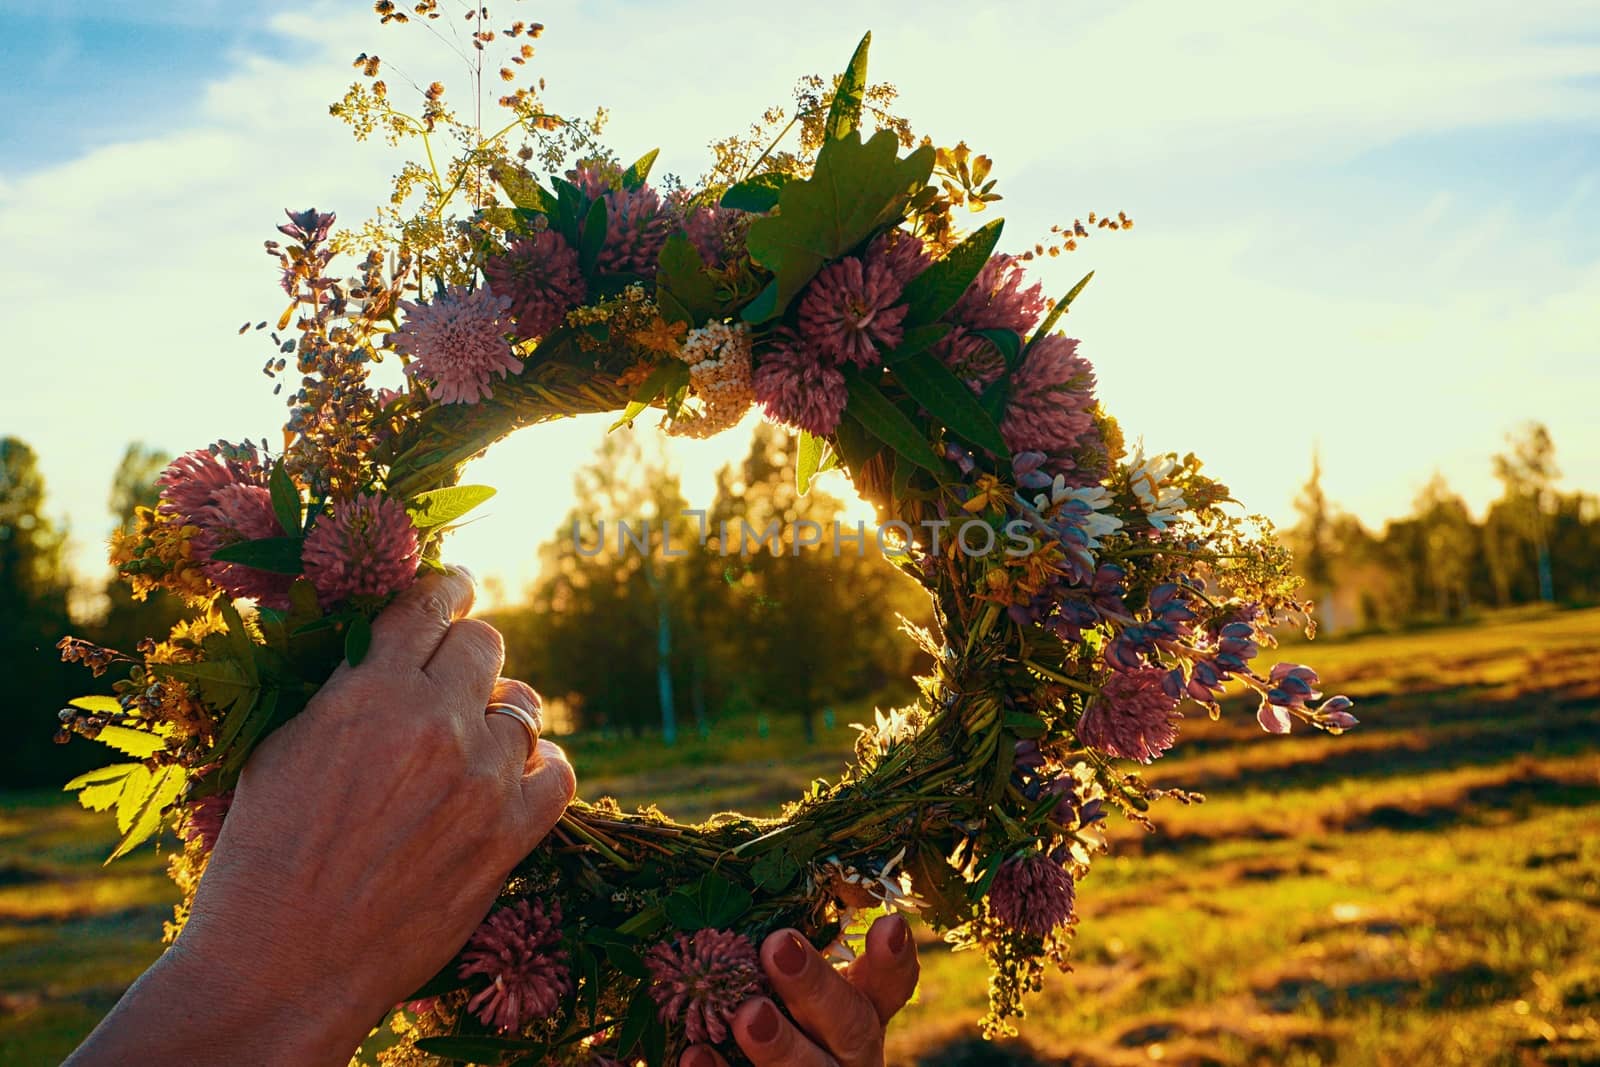 wreath of Midsummer flowers by aijaphoto